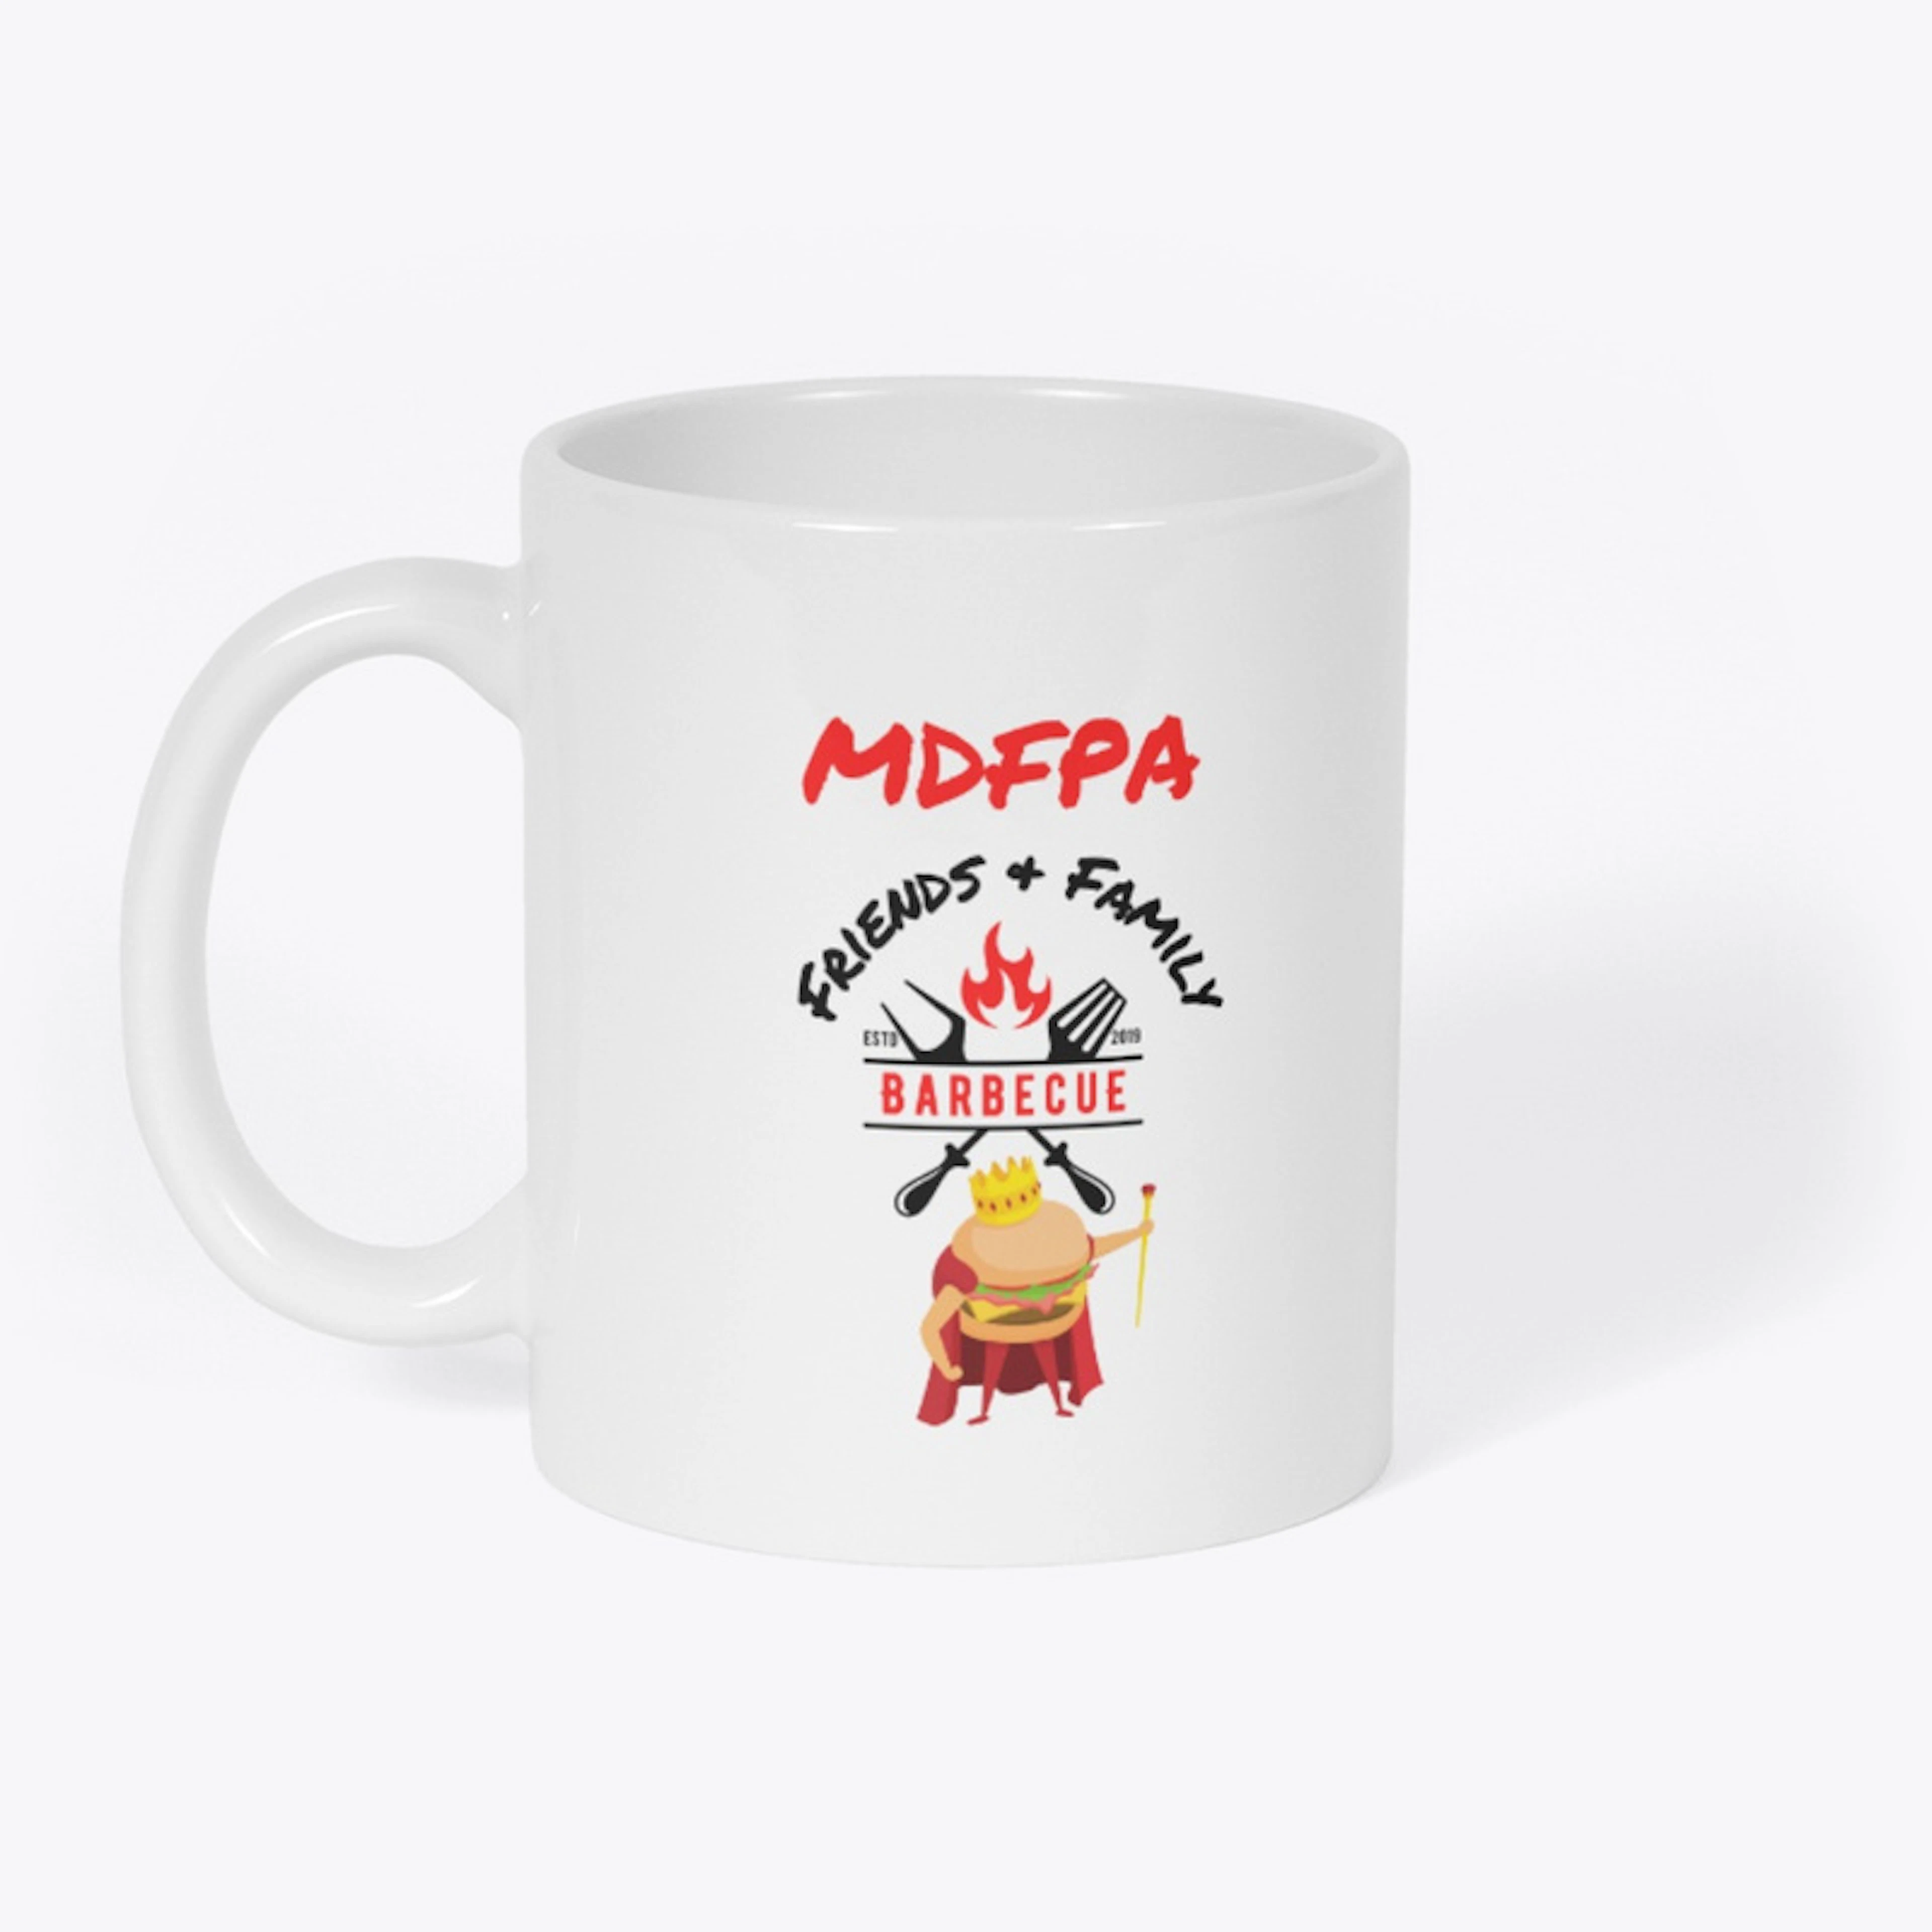 MDFPA BBQ T-Shirts and MUG